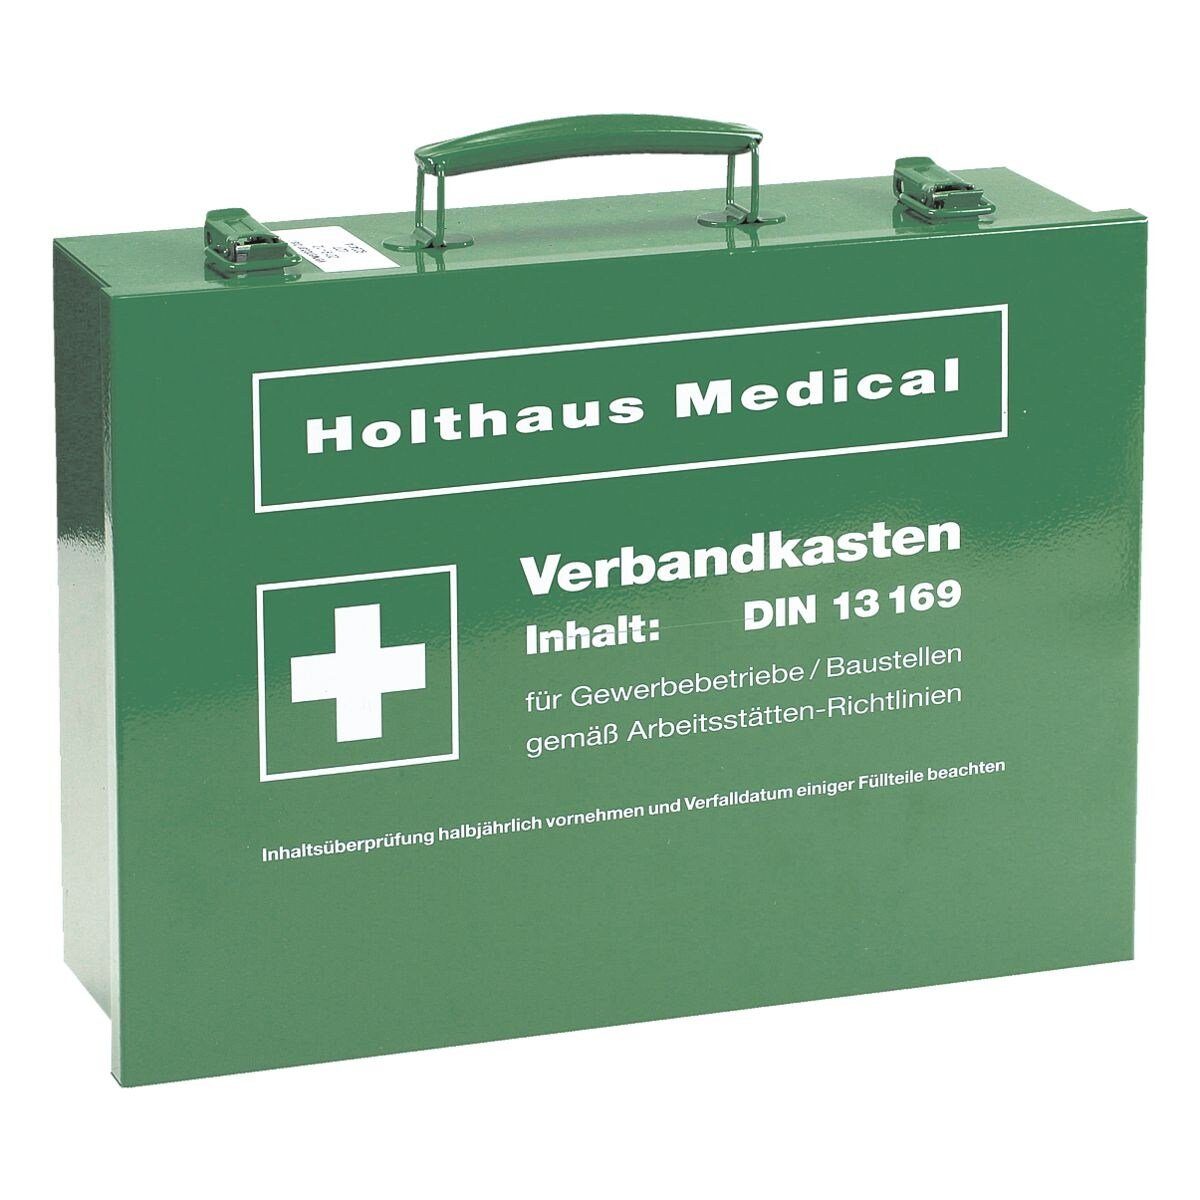 Holthaus Medical Erste-Hilfe-Koffer Stahlblech, inkl. Füllsortiment DIN 13169 nach